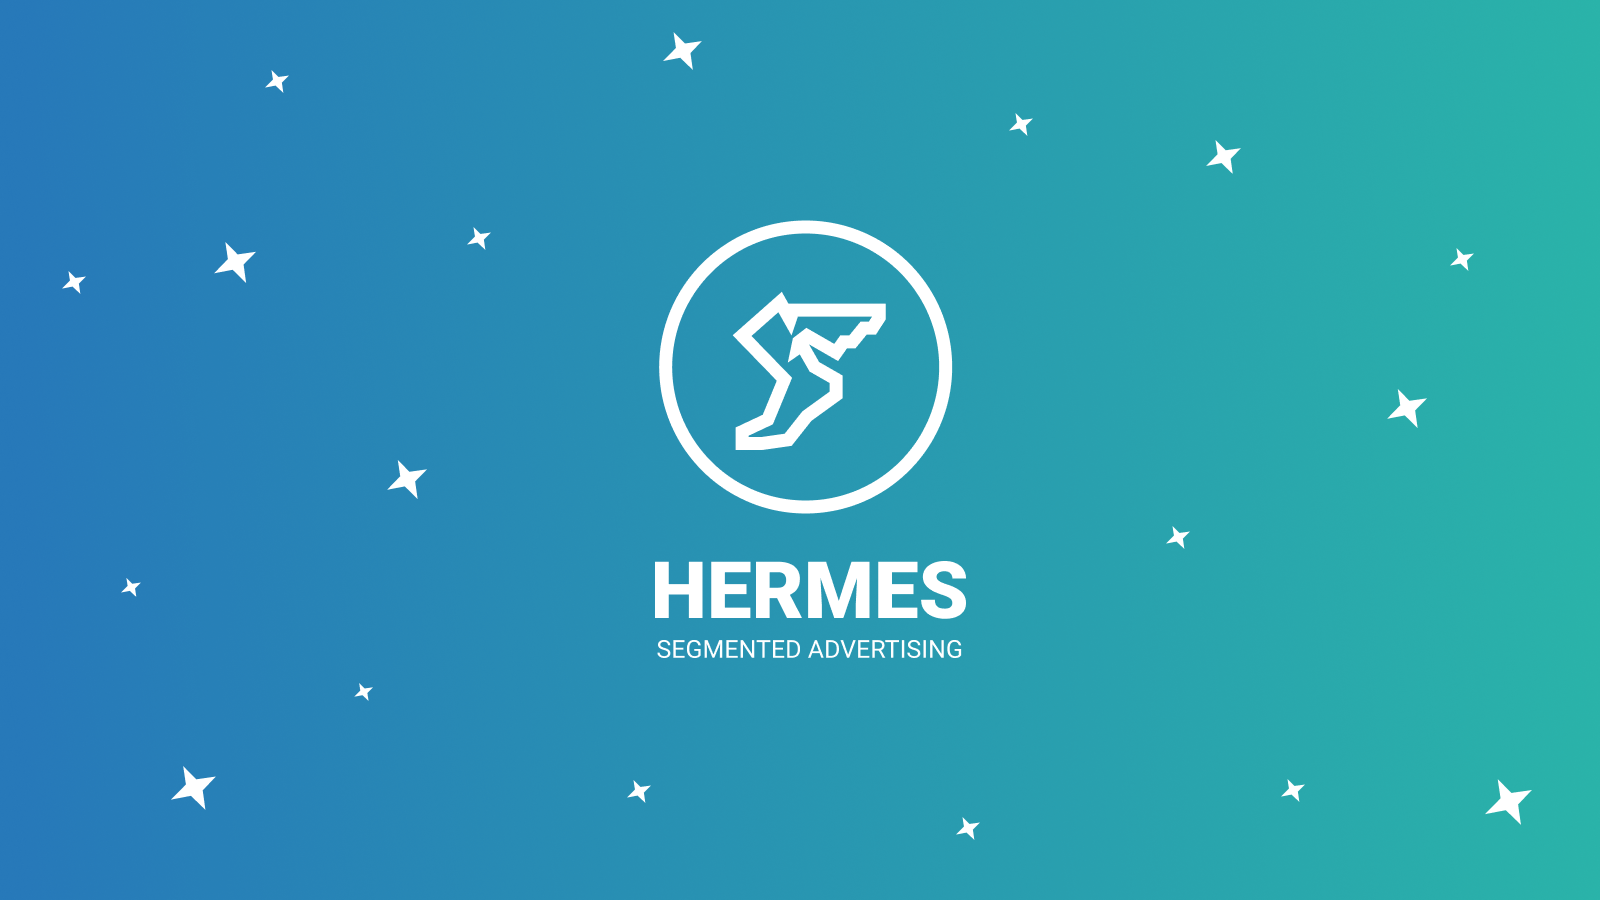 Hermes Segmented Advertising - a new Data Union